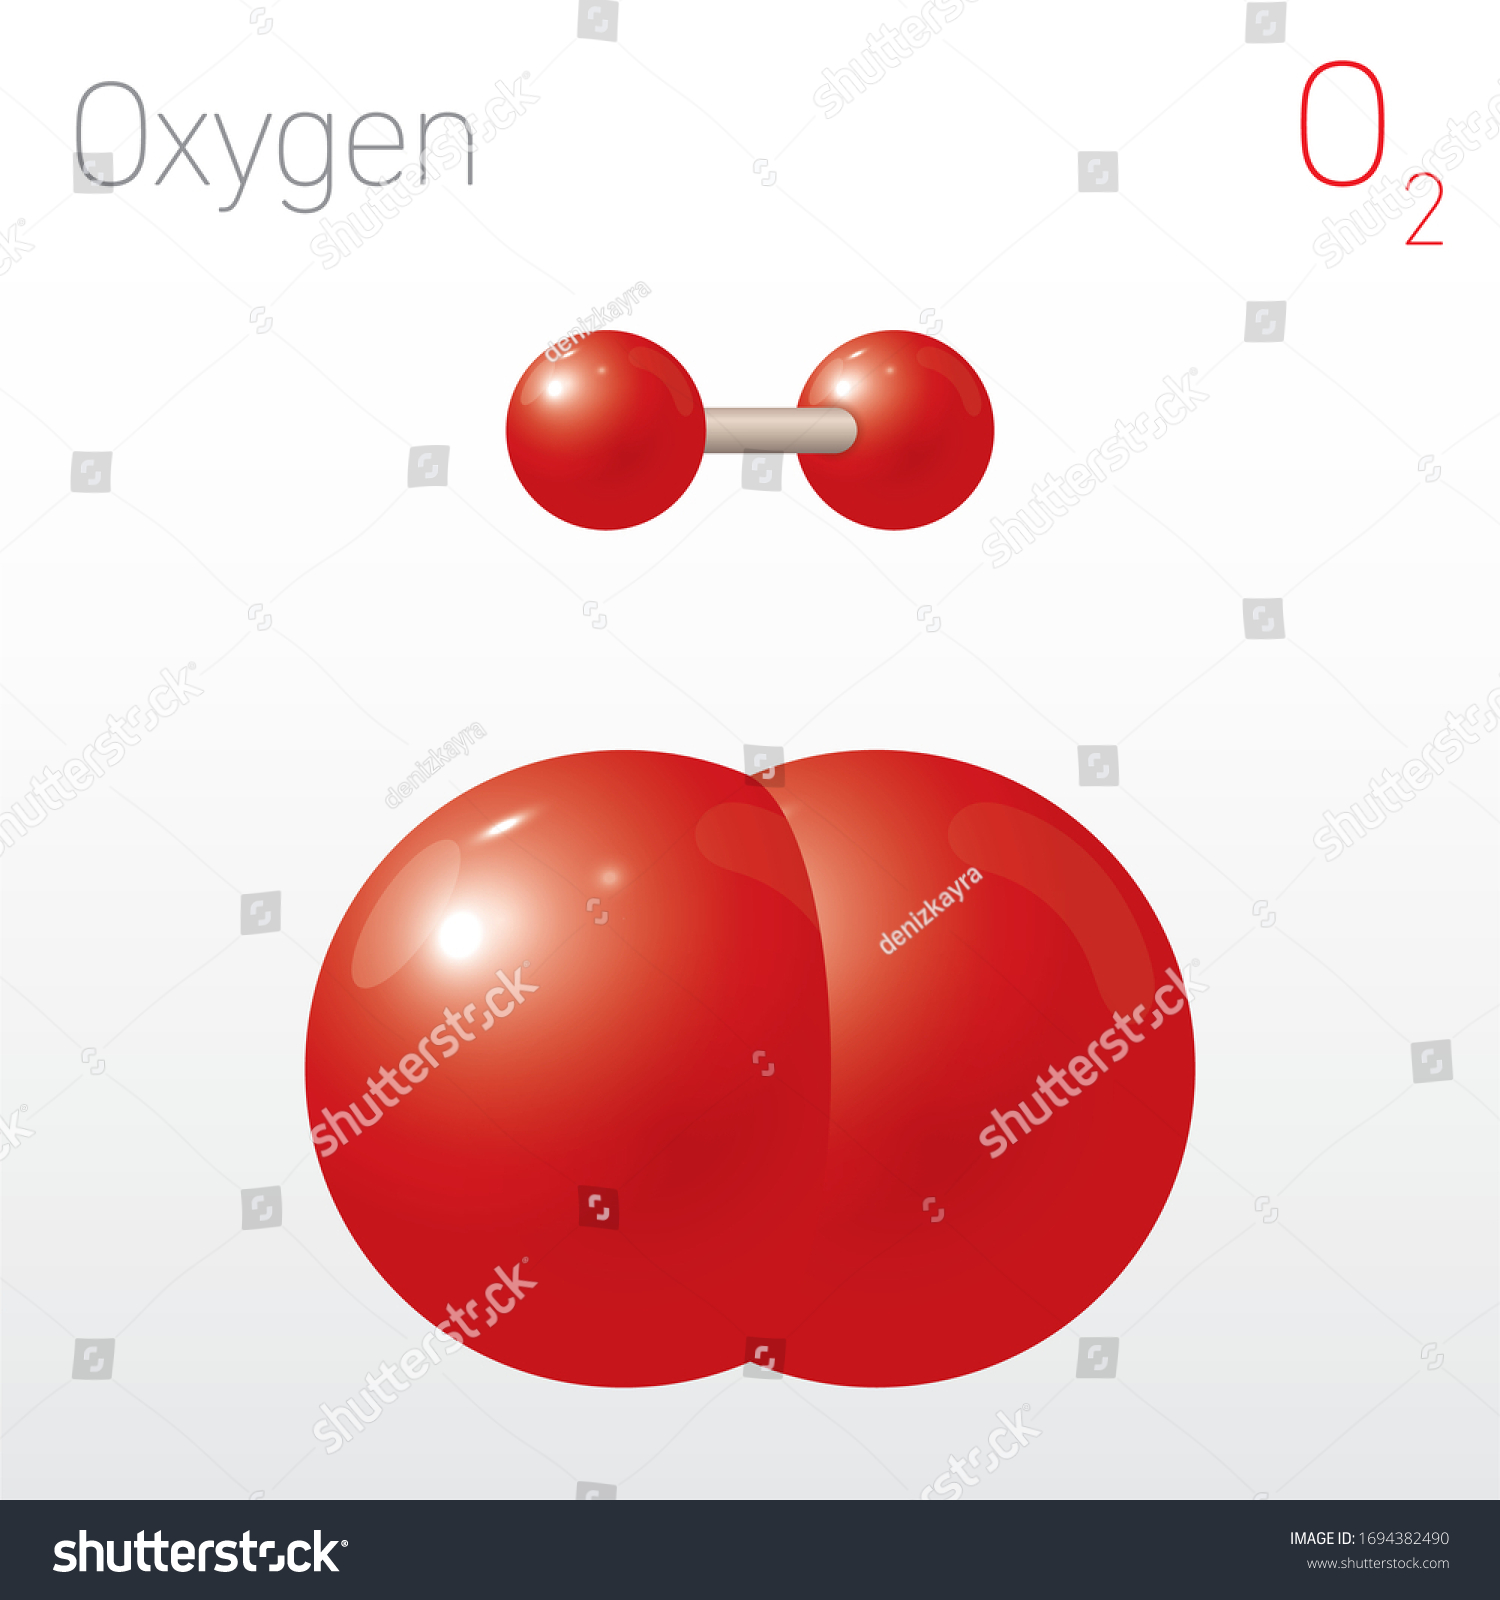 Oxygen formula